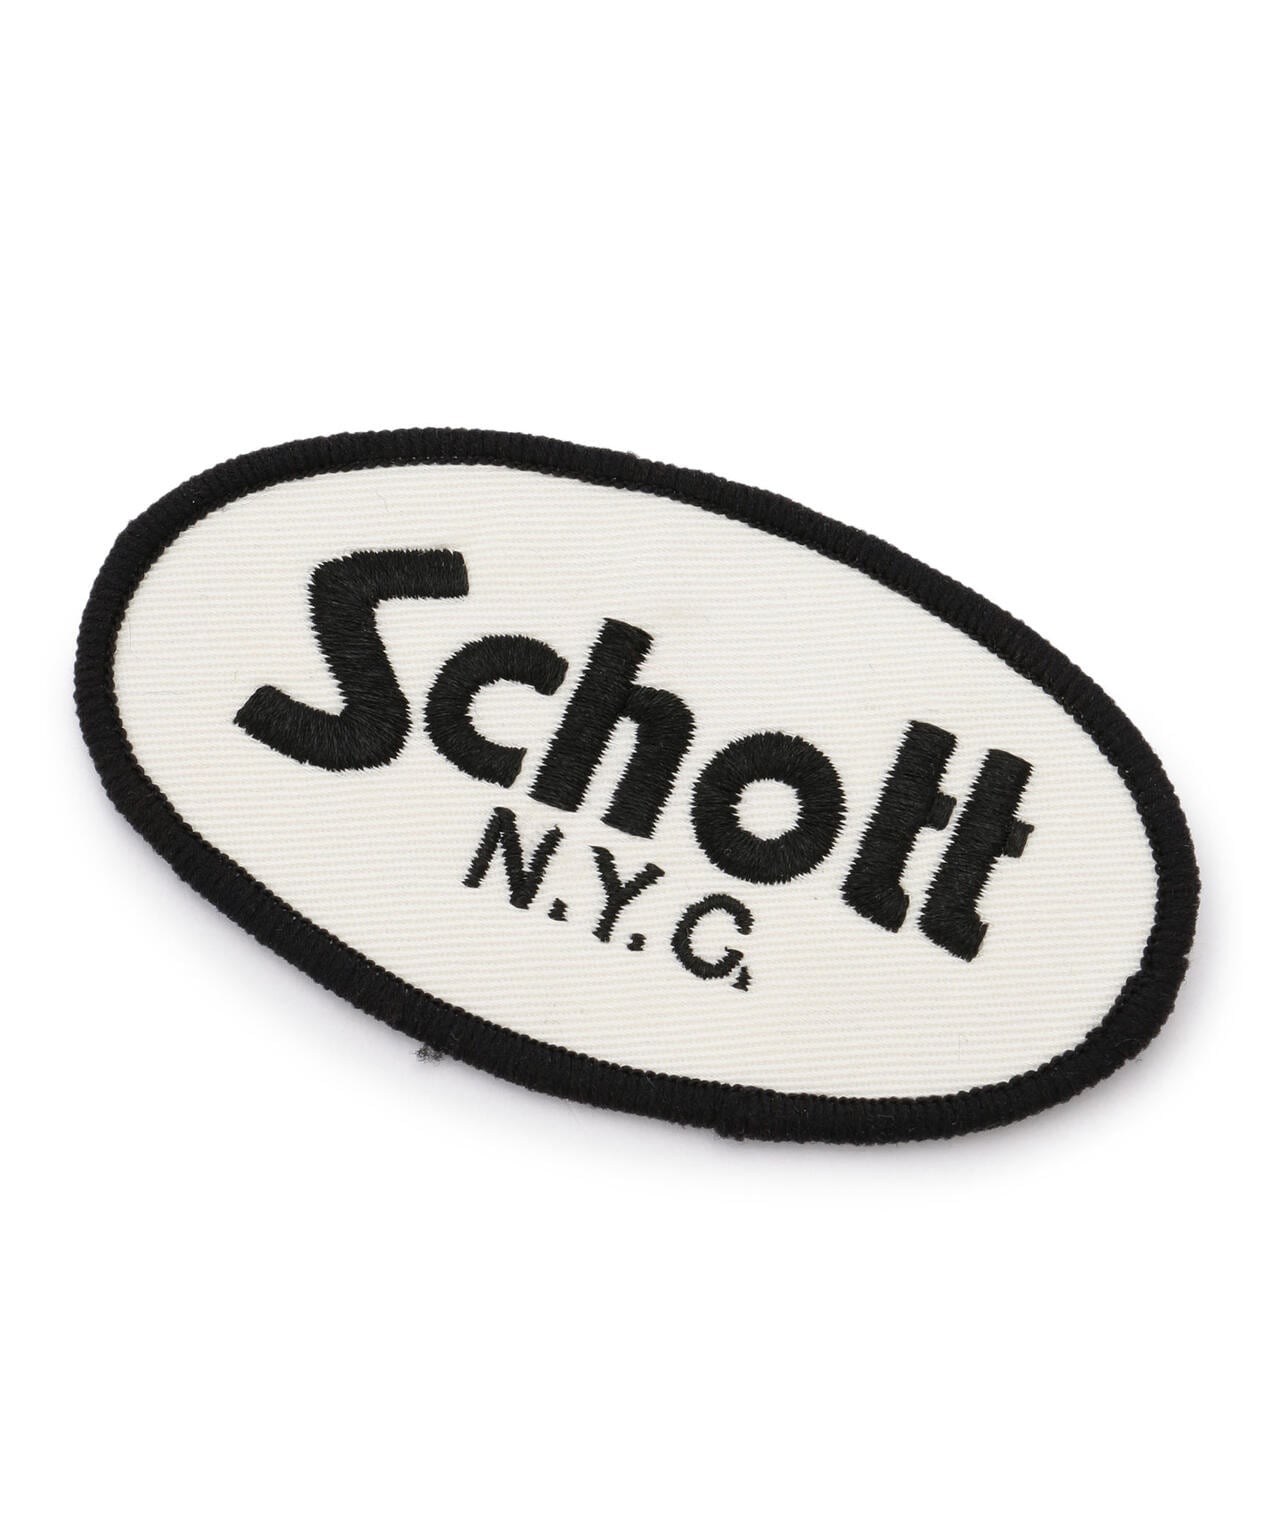 SCHOTT/ショット/ BASIC LOGO PATCH/ベーシック ロゴ パッチ | Schott